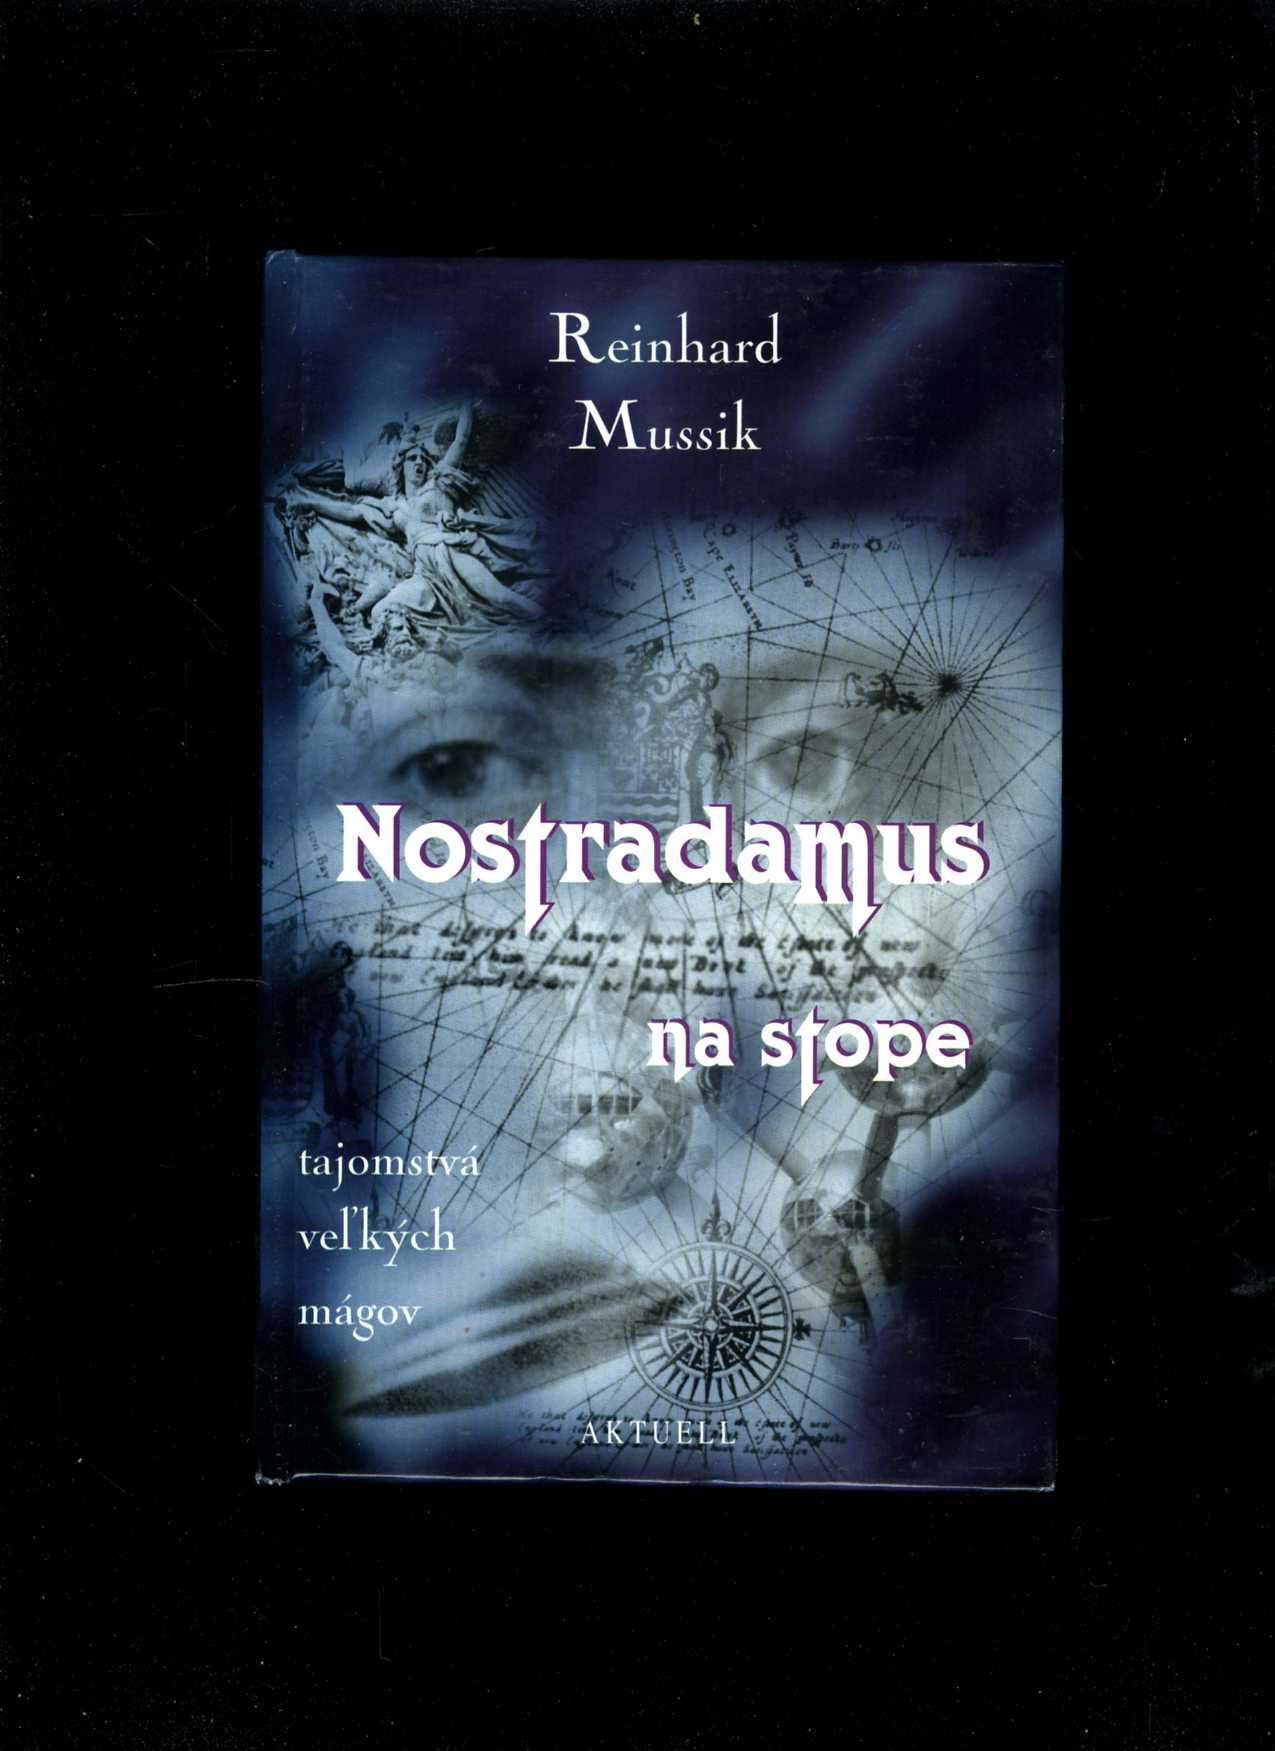 Nostradamus na stope (Reinhard Mussik)